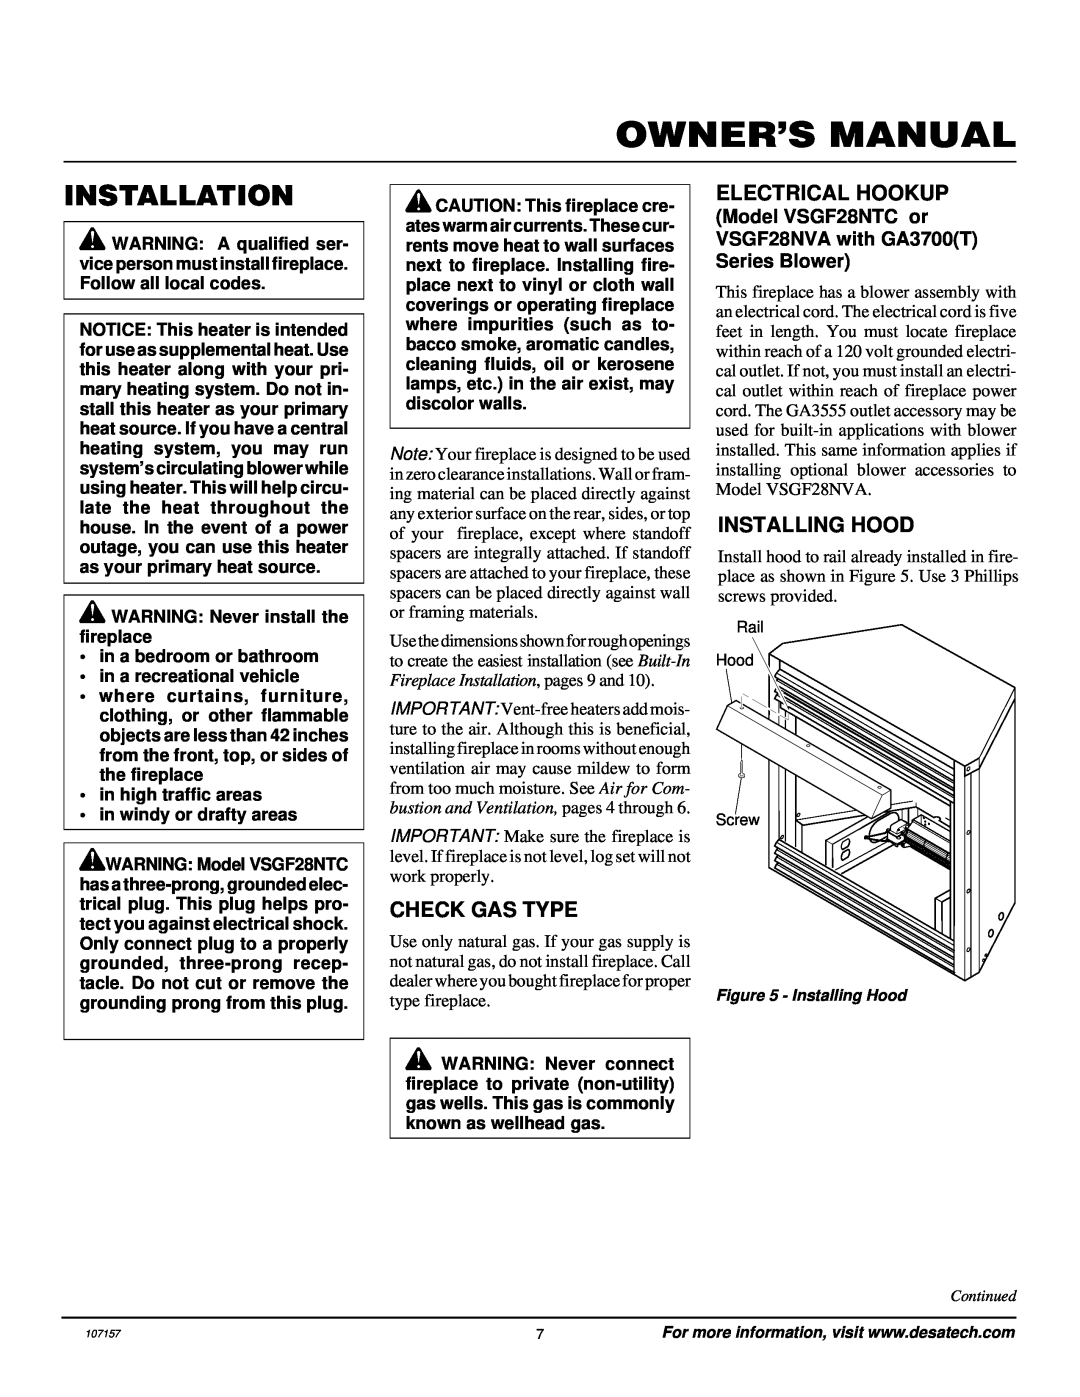 Vanguard Heating VSGF28NTC, VSGF28NVA installation manual Installation, Check Gas Type, Electrical Hookup, Installing Hood 